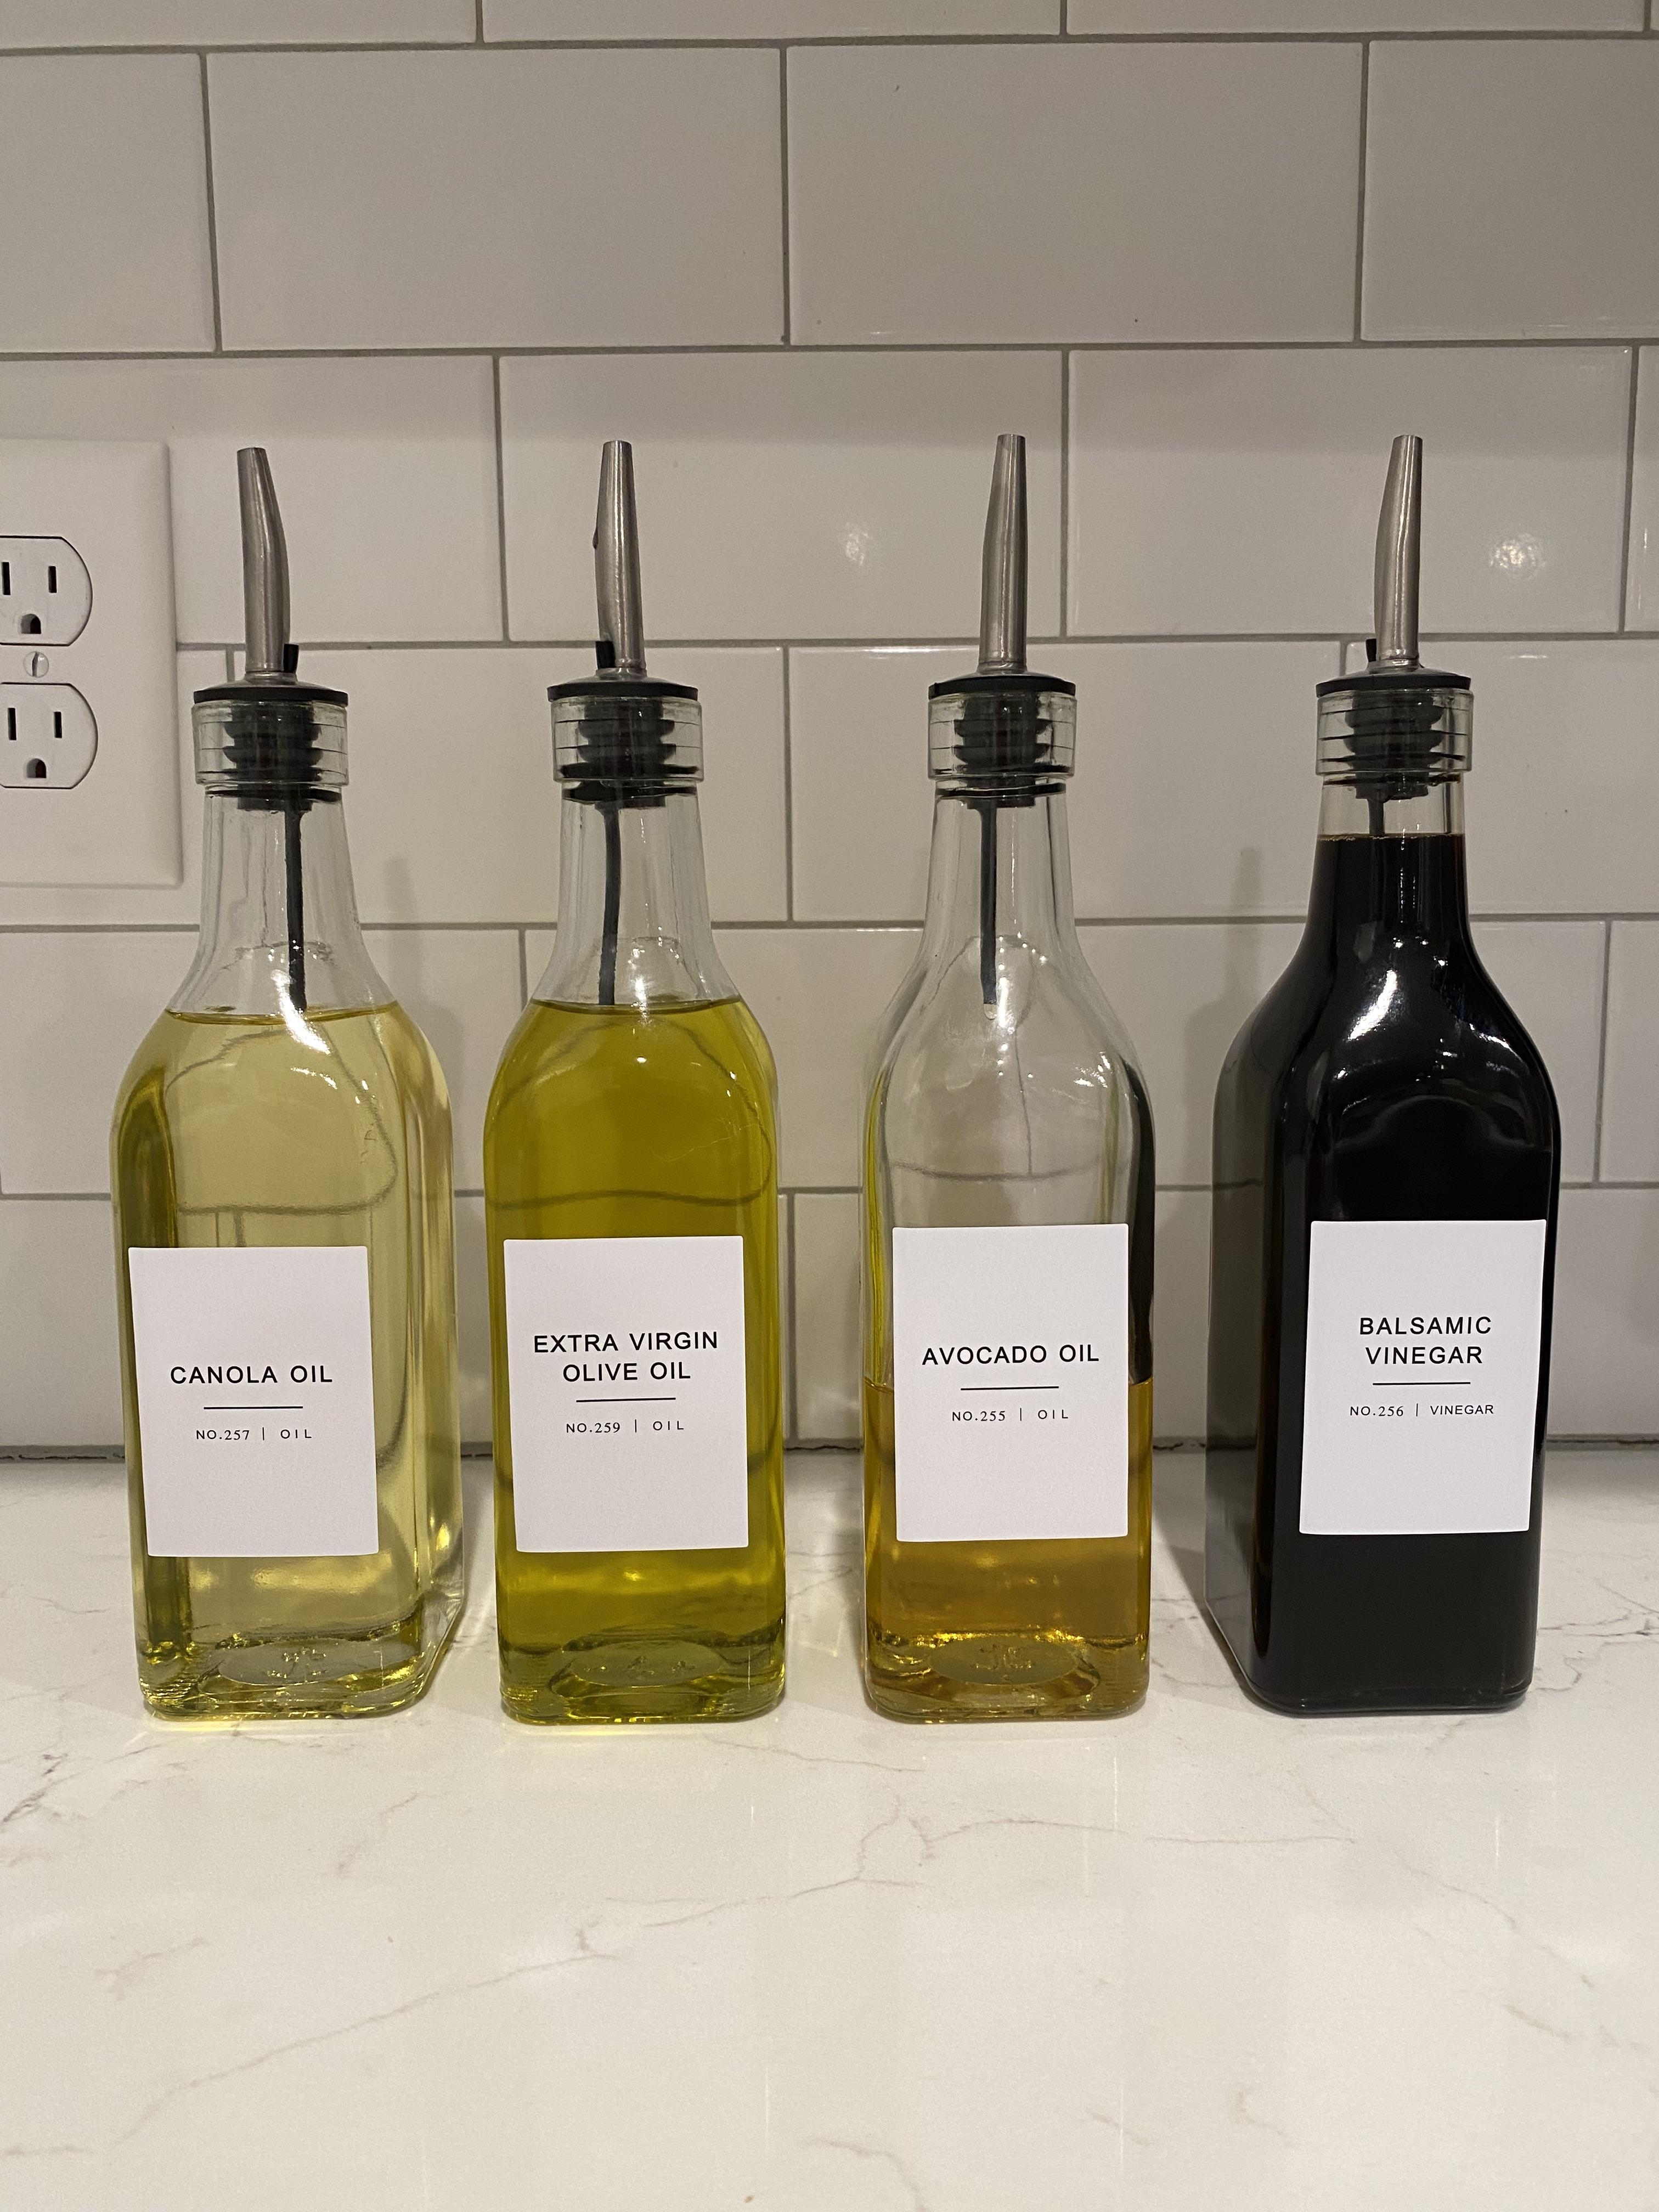 Glass bottles in the kitchen labeled for canola oil, olive oil, avocado oil, and balsamic vinegar